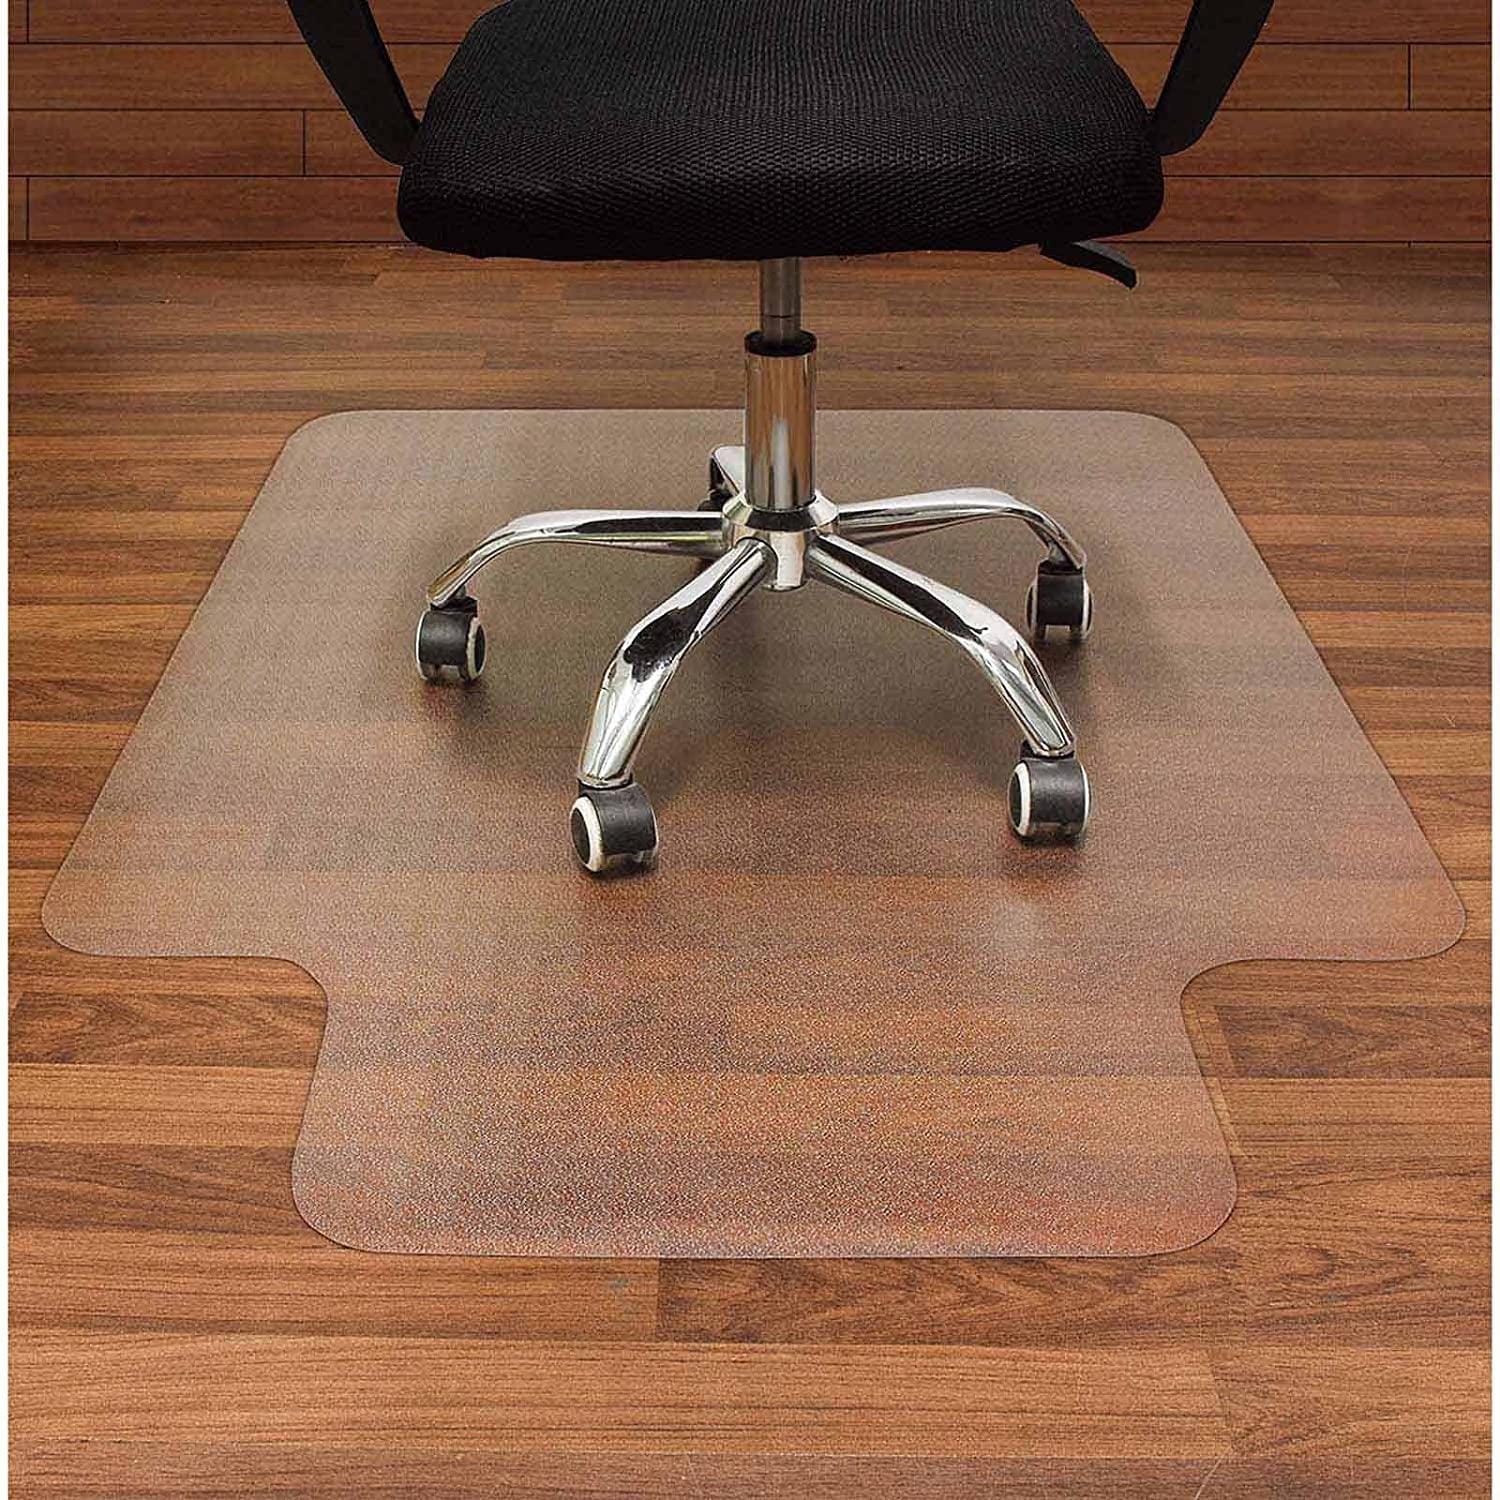 NEW 48" x 60" PVC Chair Floor Mat Home Office Protector For Hard Wood Floors 